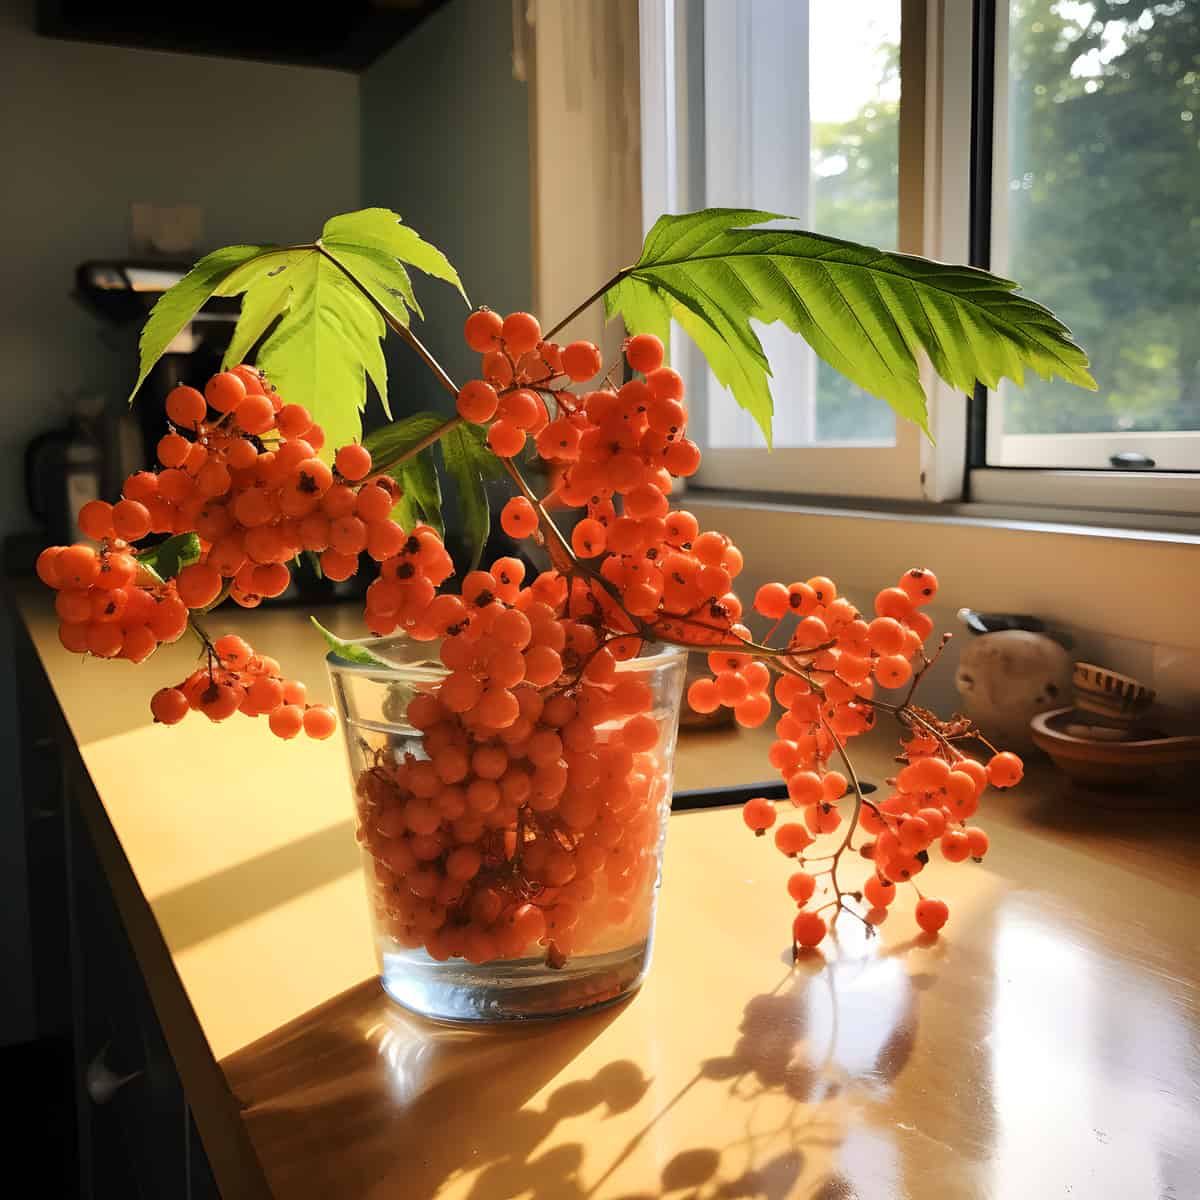 Sorbus Randaiensis on a kitchen counter